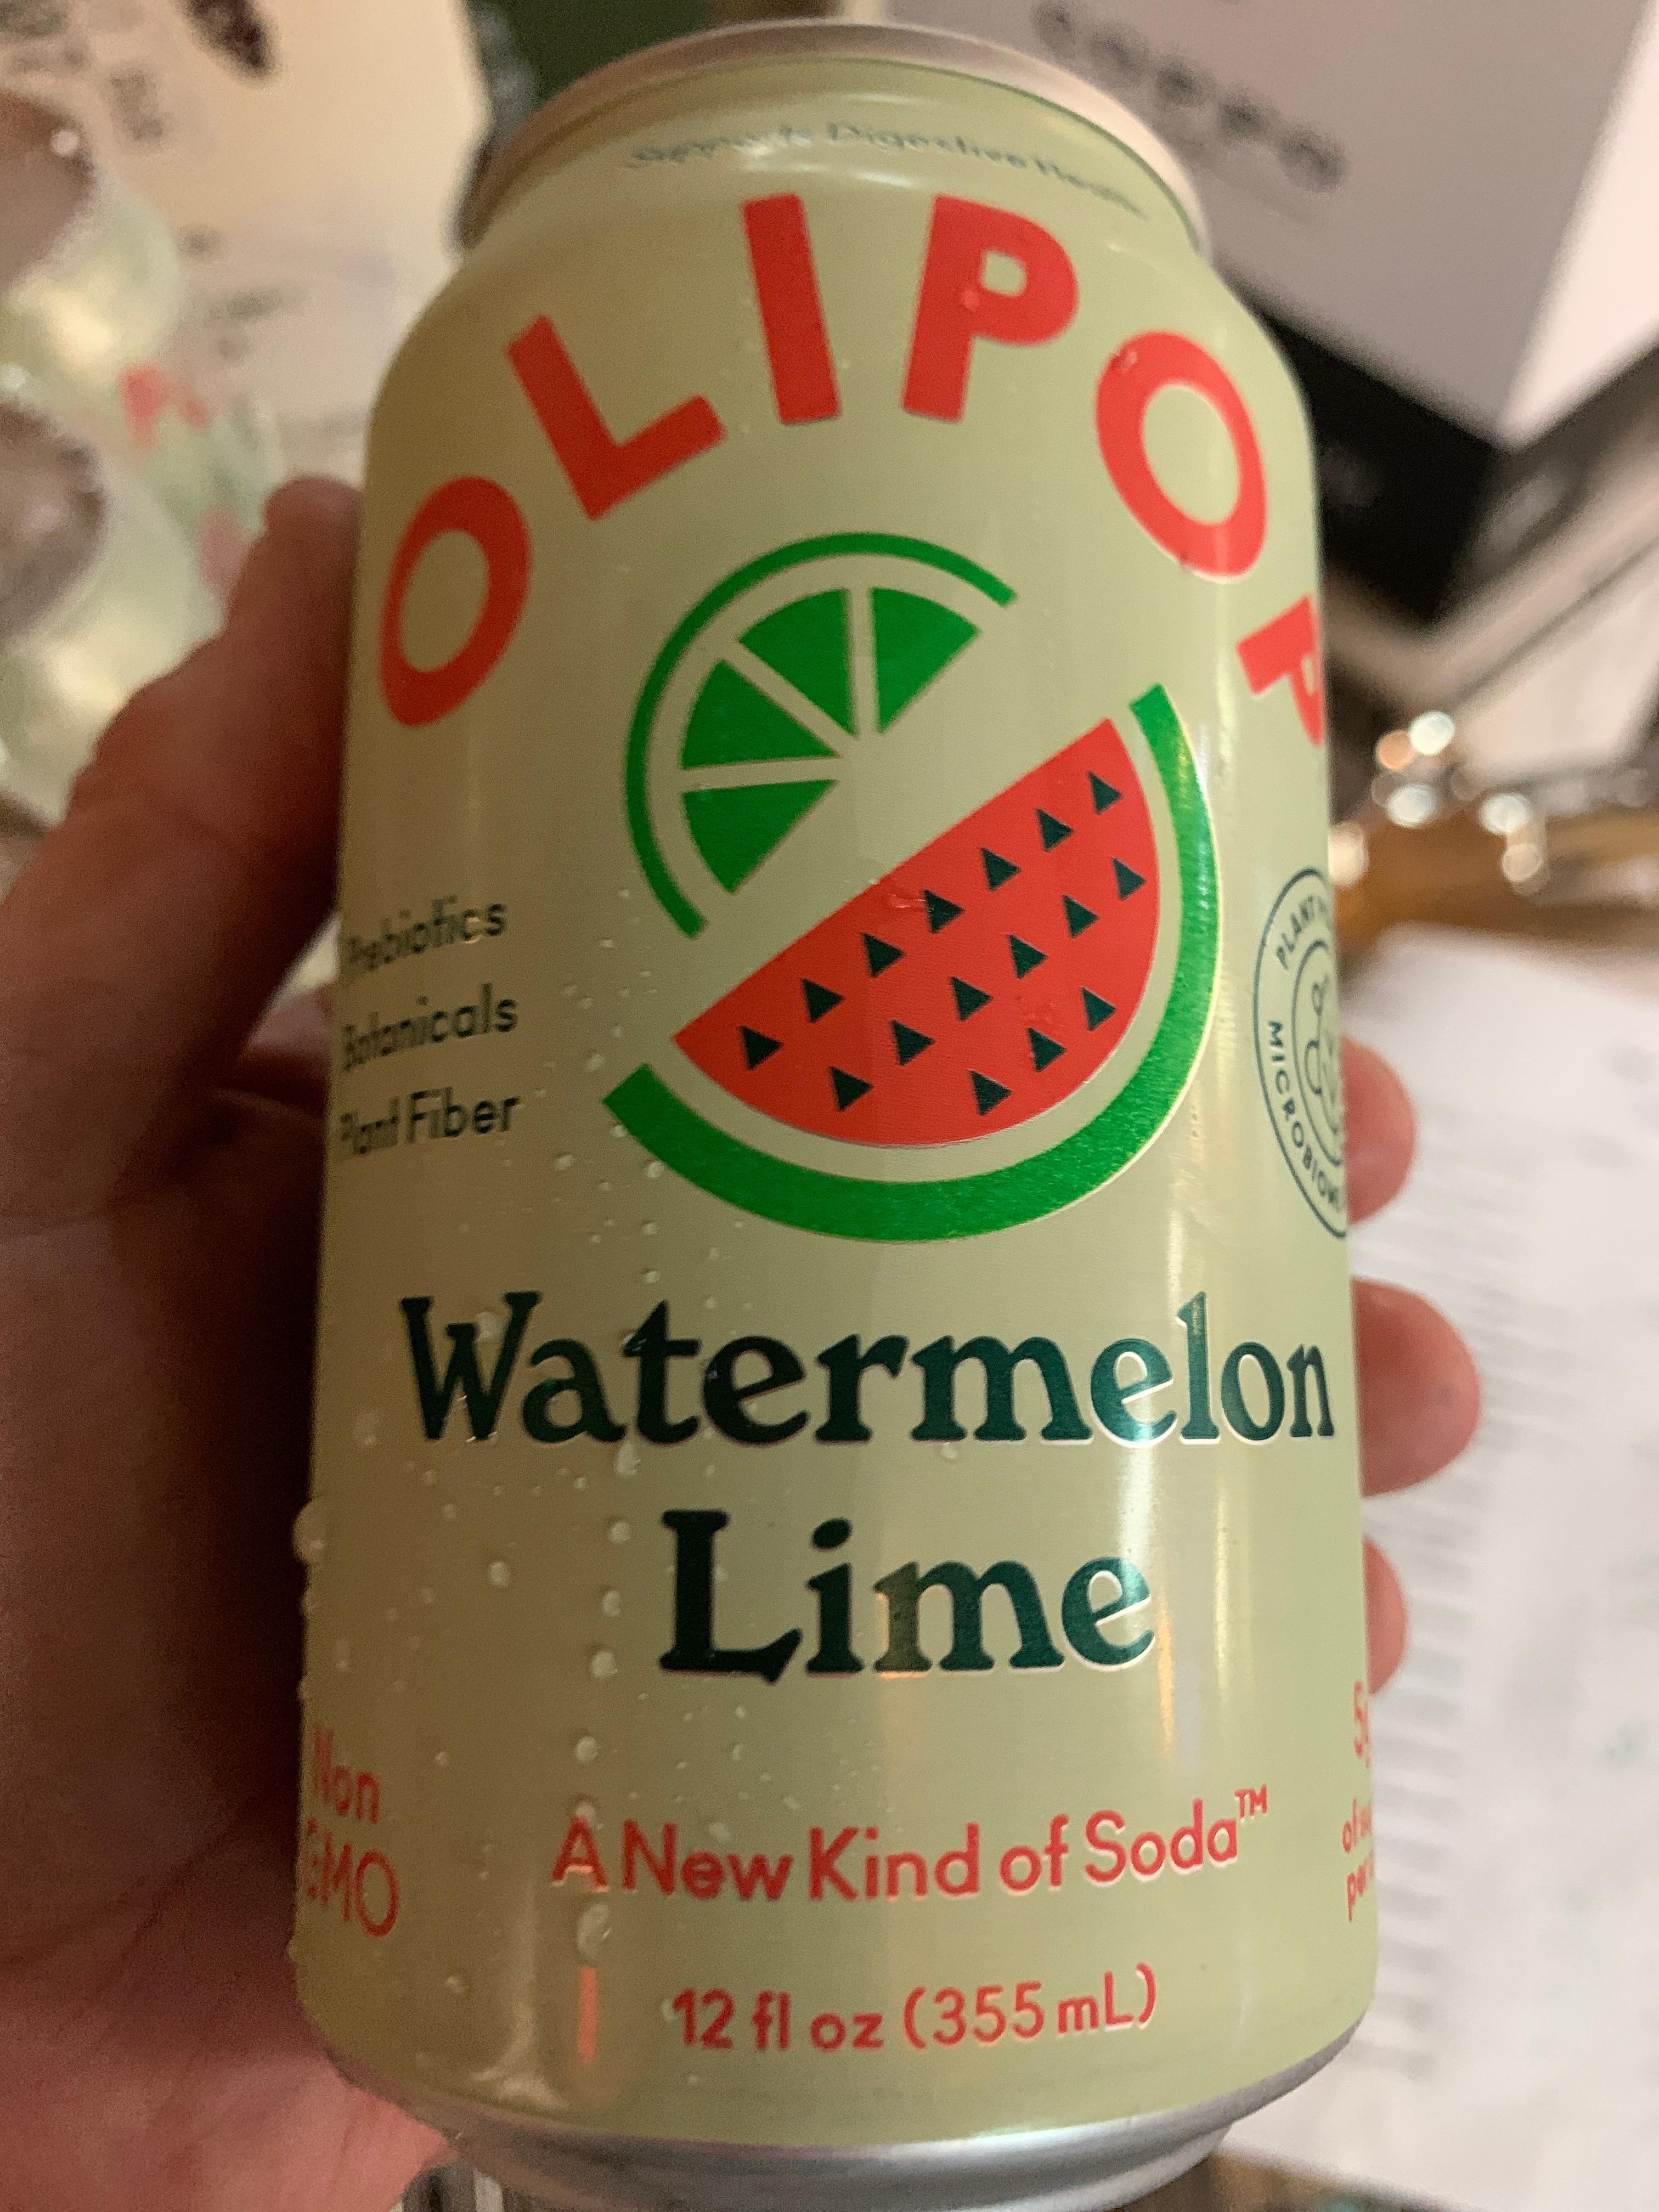 Olipop Watermelon Lime